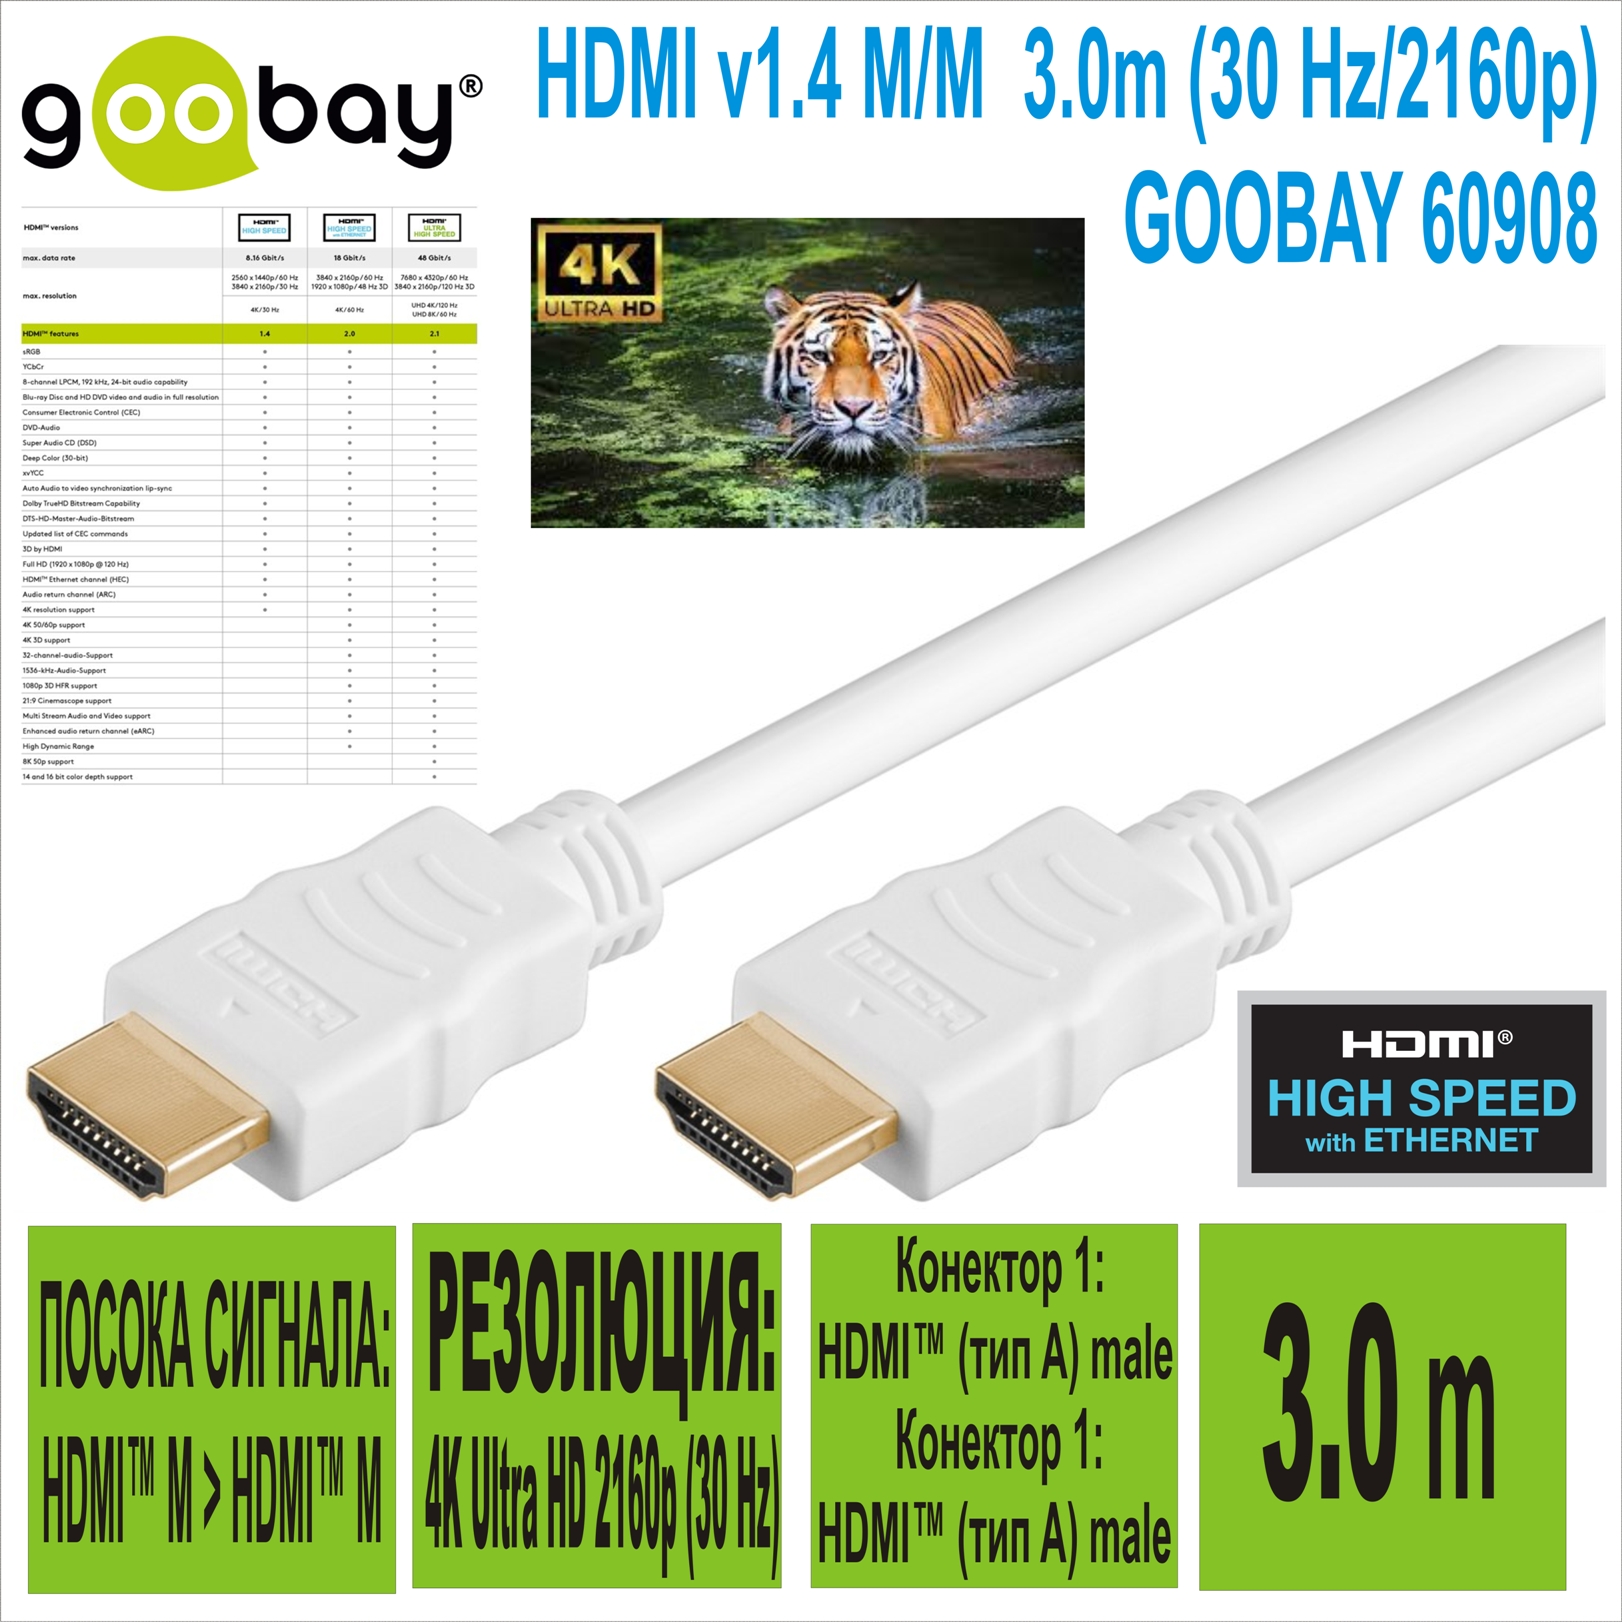 HDMI v1.4 M/M  3.0m (30 Hz/2160p) GOOBAY 60908